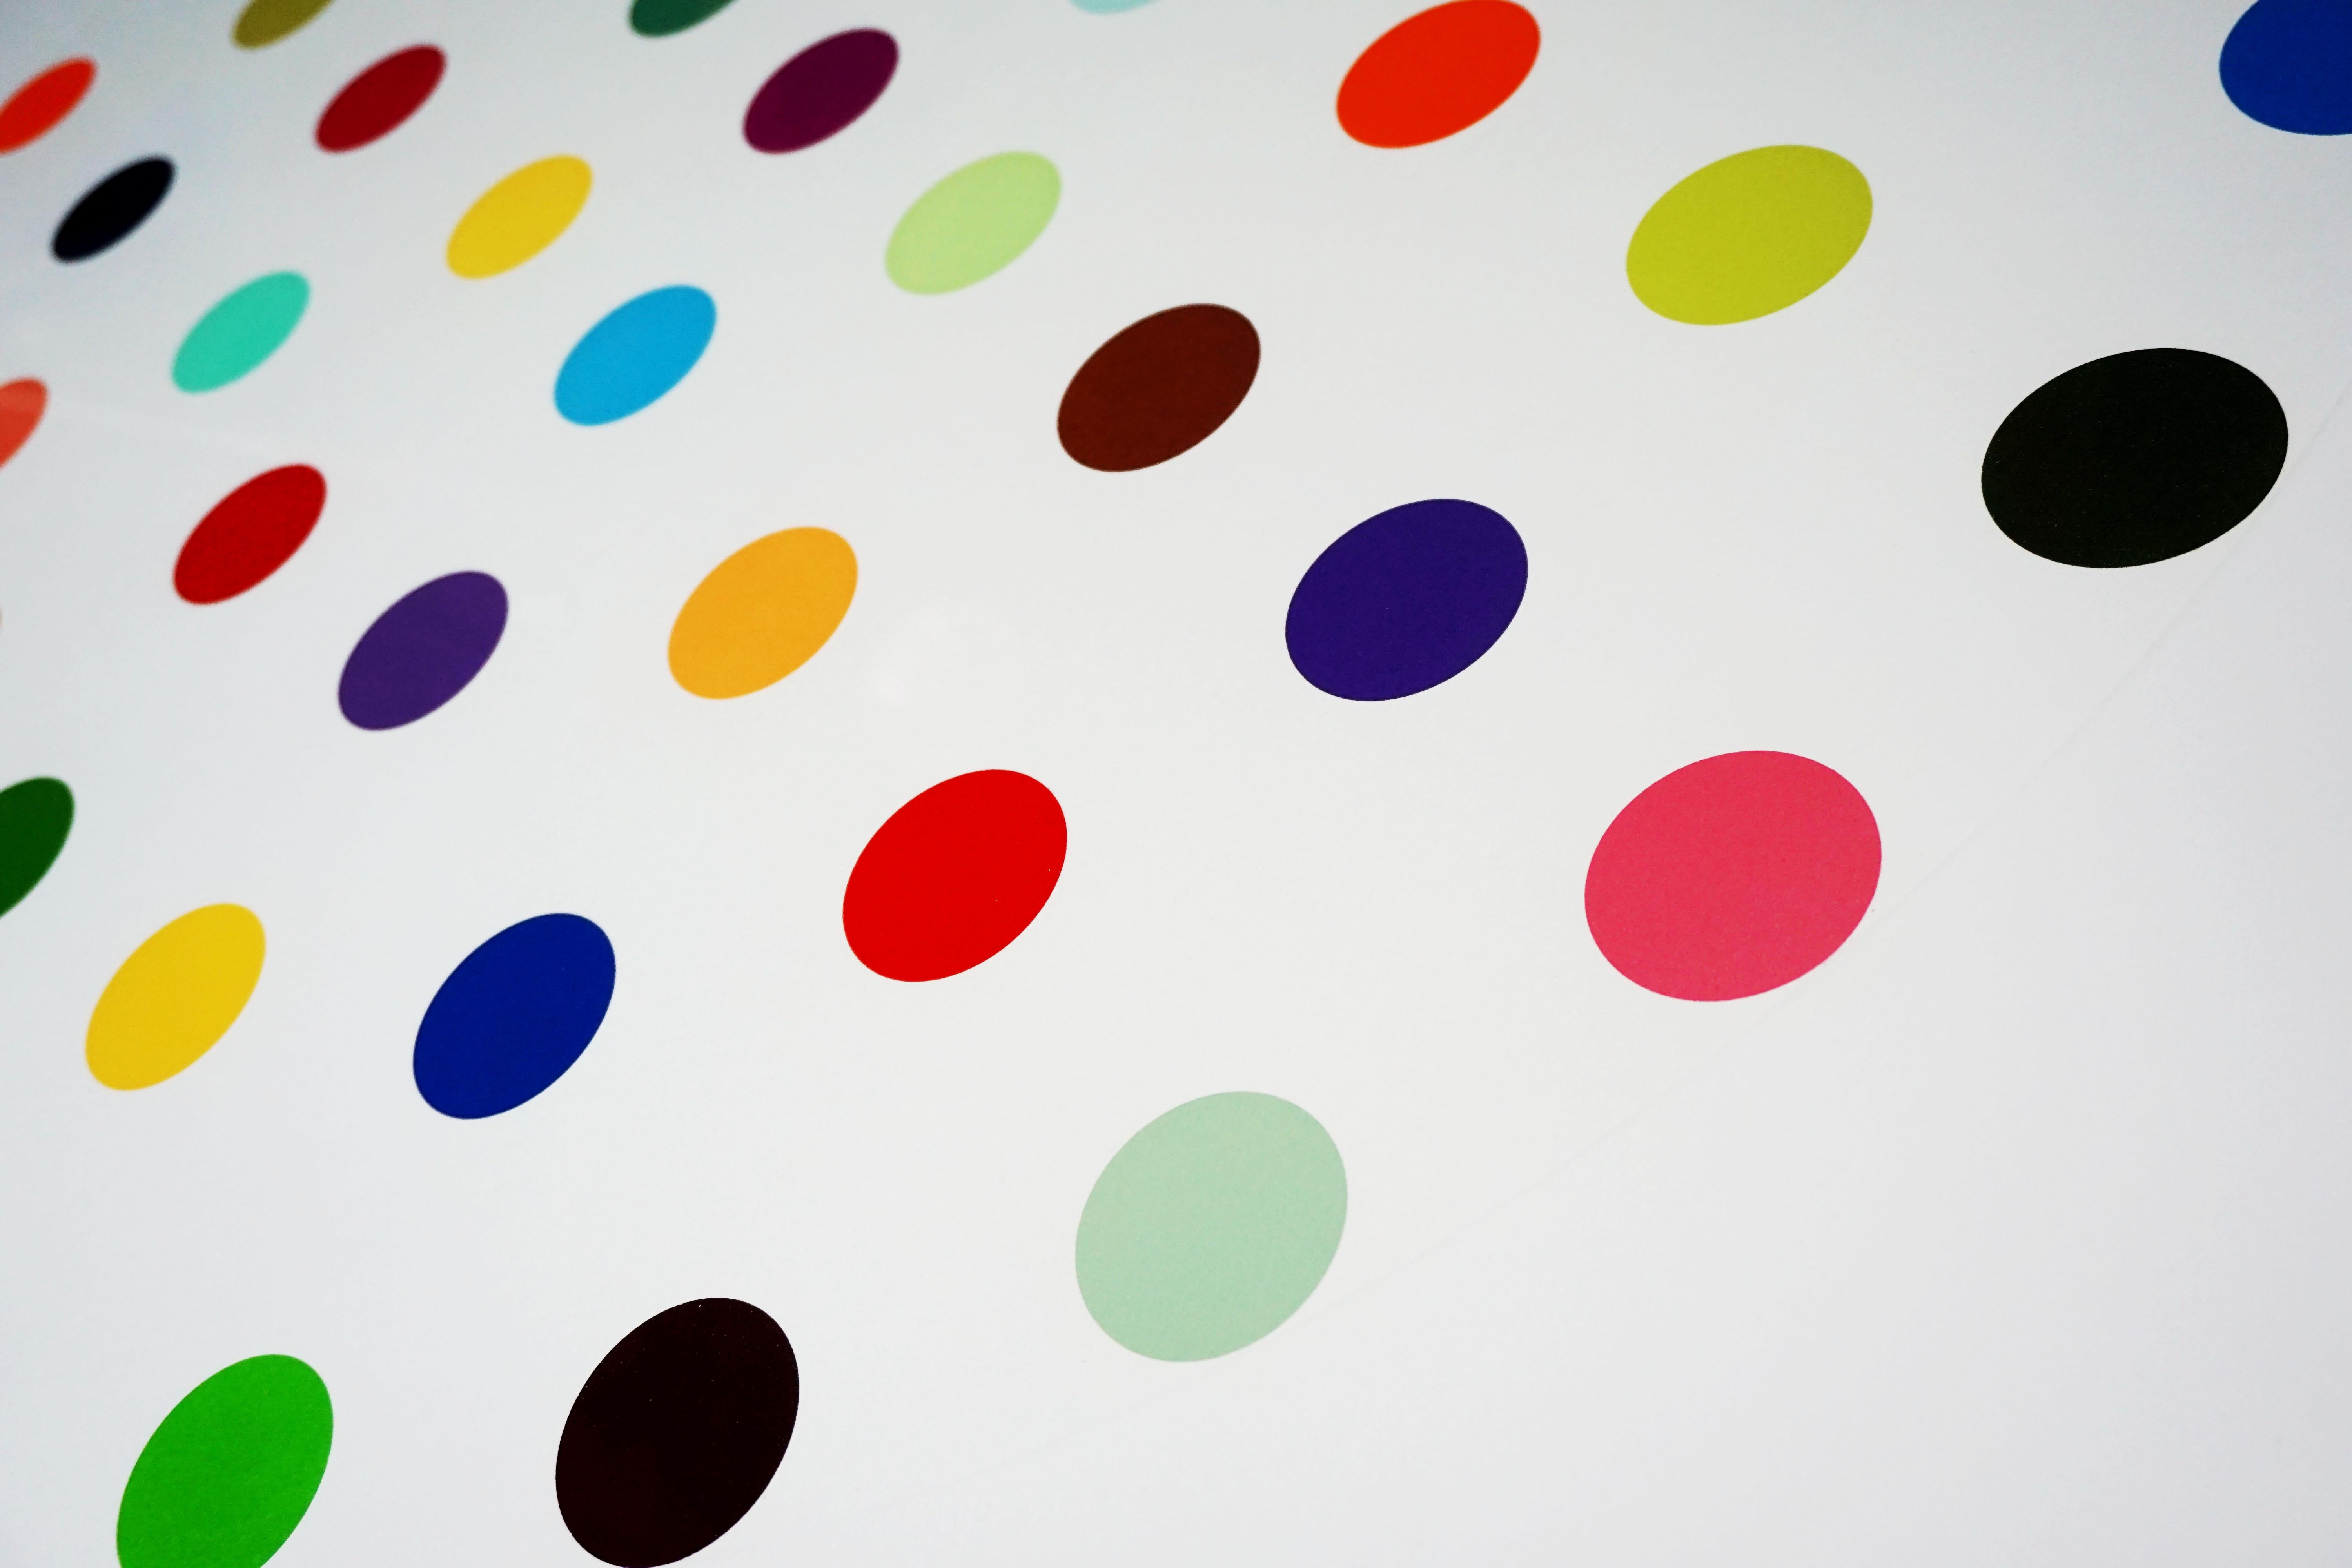 Damien Hirst, Multi-color 'Spots' Etching, 2004 6